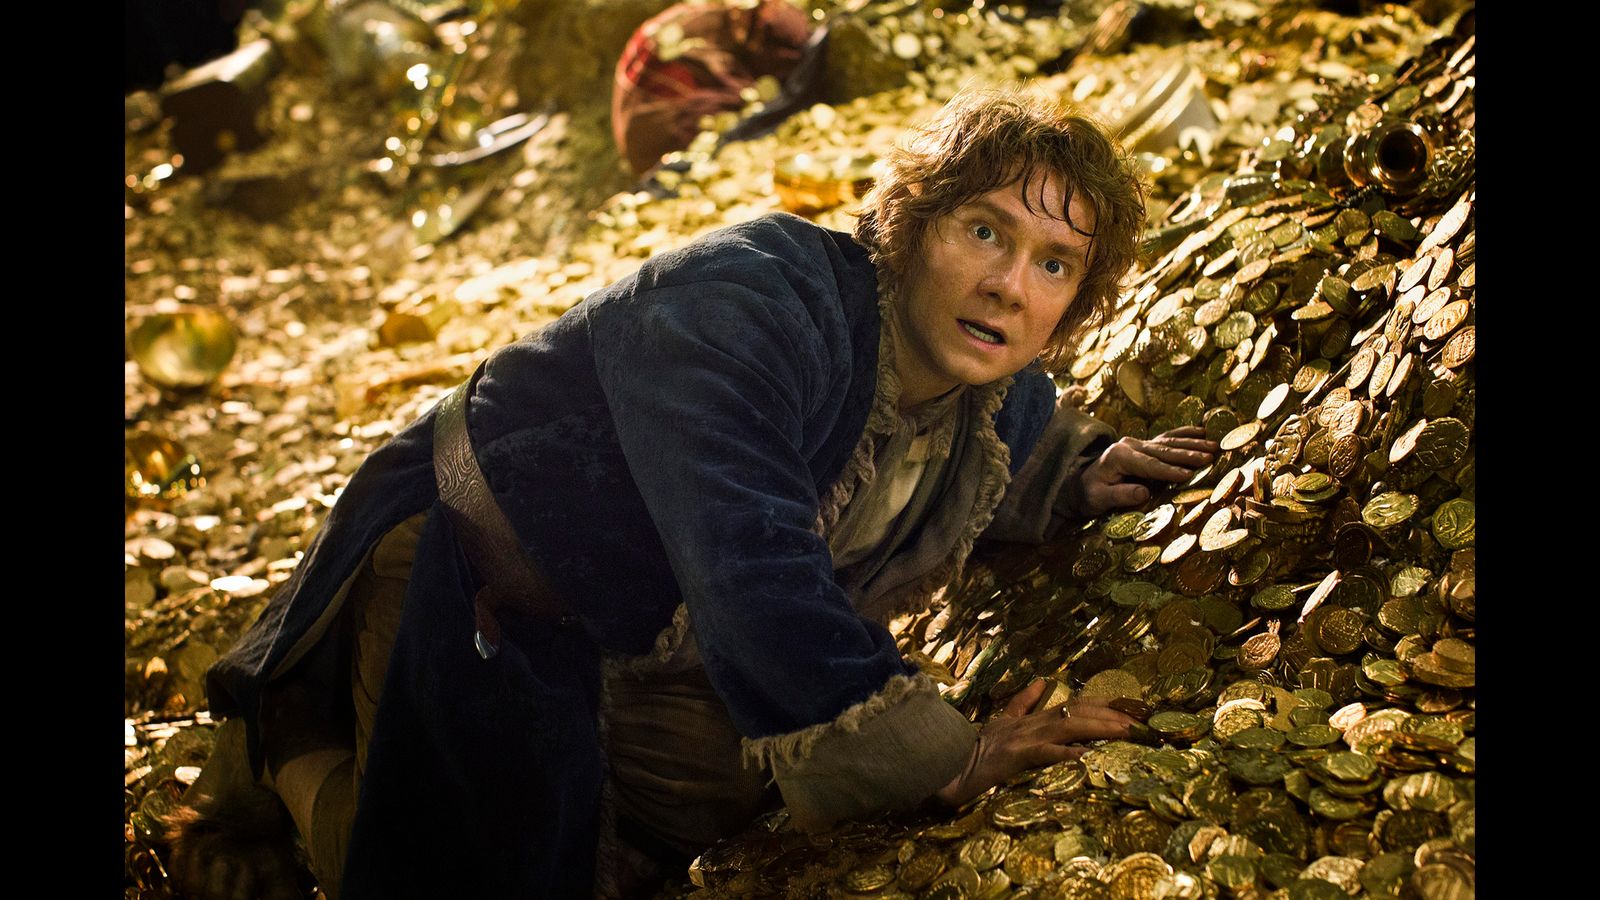 THE HOBBIT: THE DESOLATION OF SMAUG, Martin Freeman as Bilbo Baggins